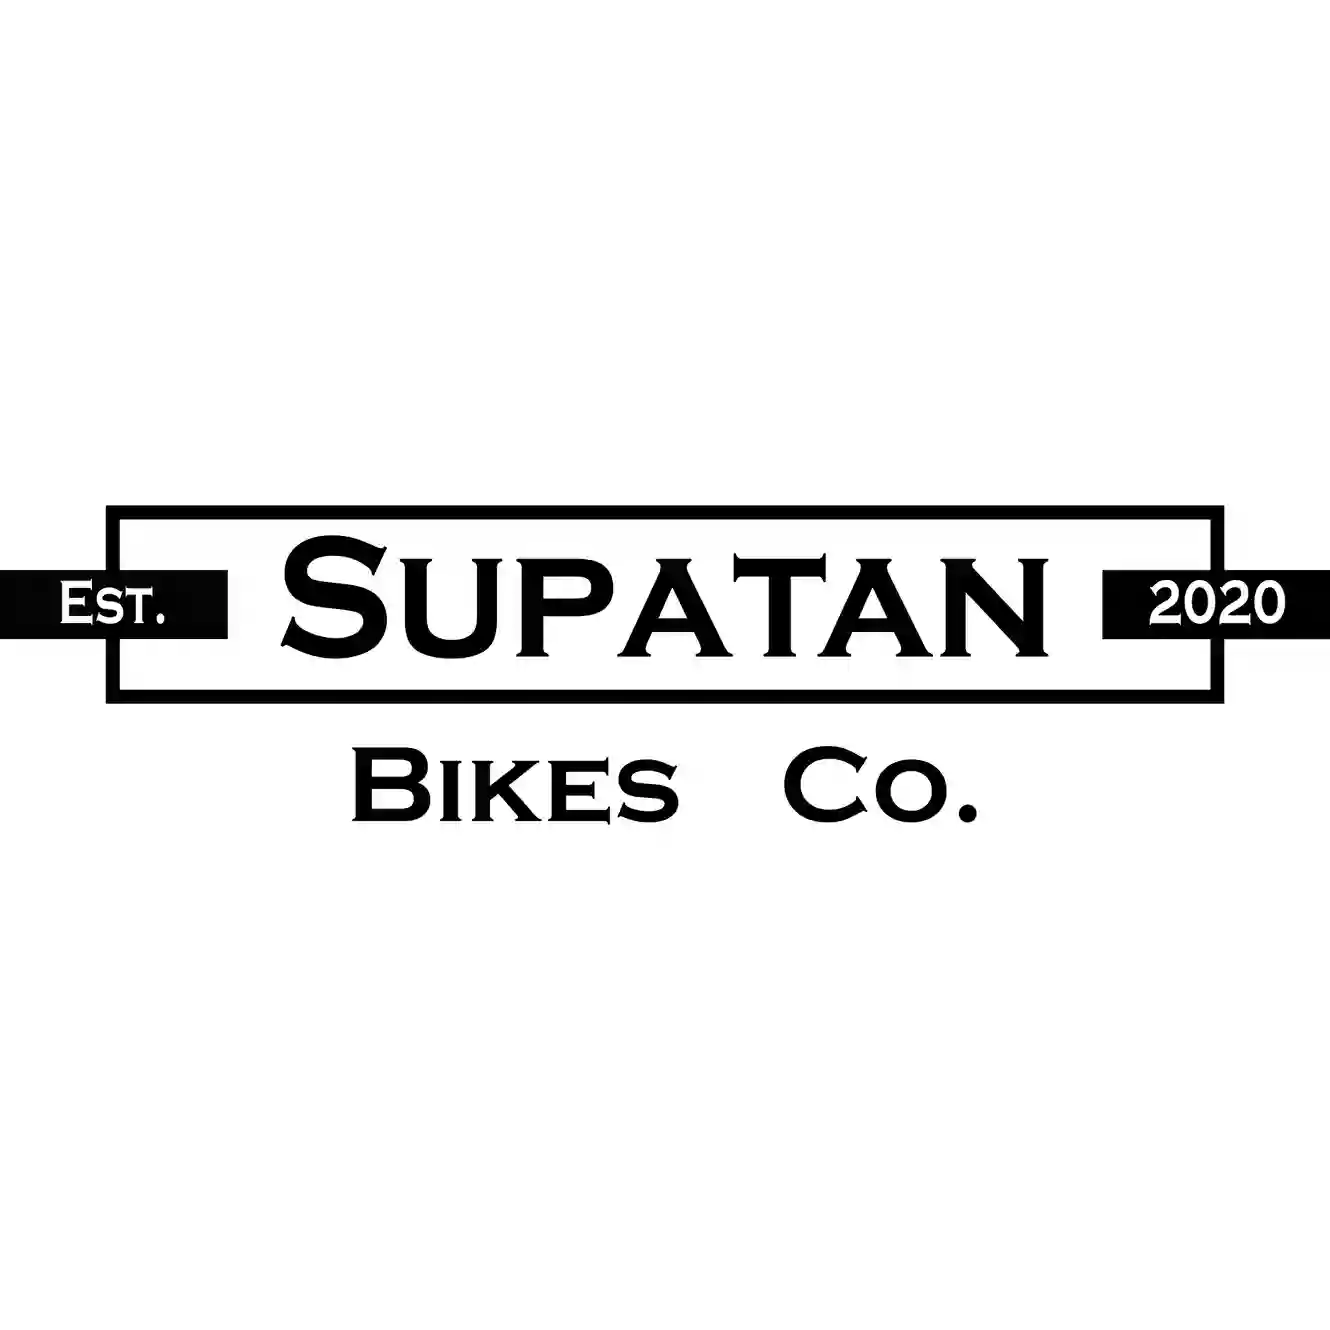 Supatan Bikes Co